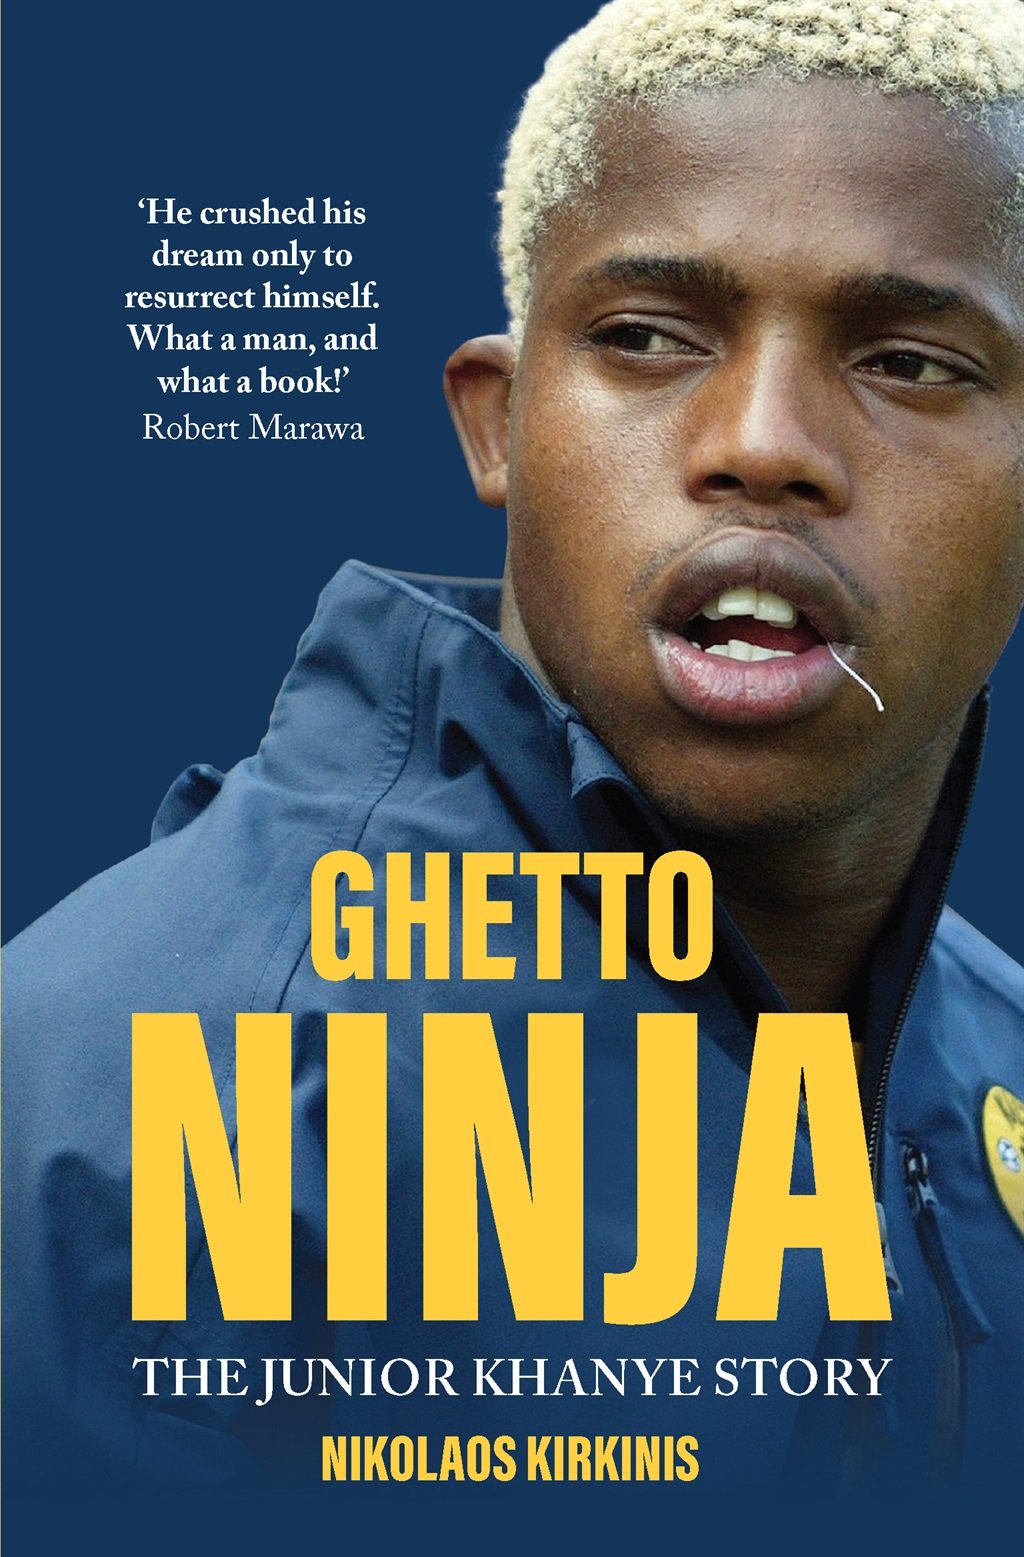 Ghetto Ninja: The Junior Khanye Story by Nikolaos Kirkinis and Junior Khanye. (Tafelberg)